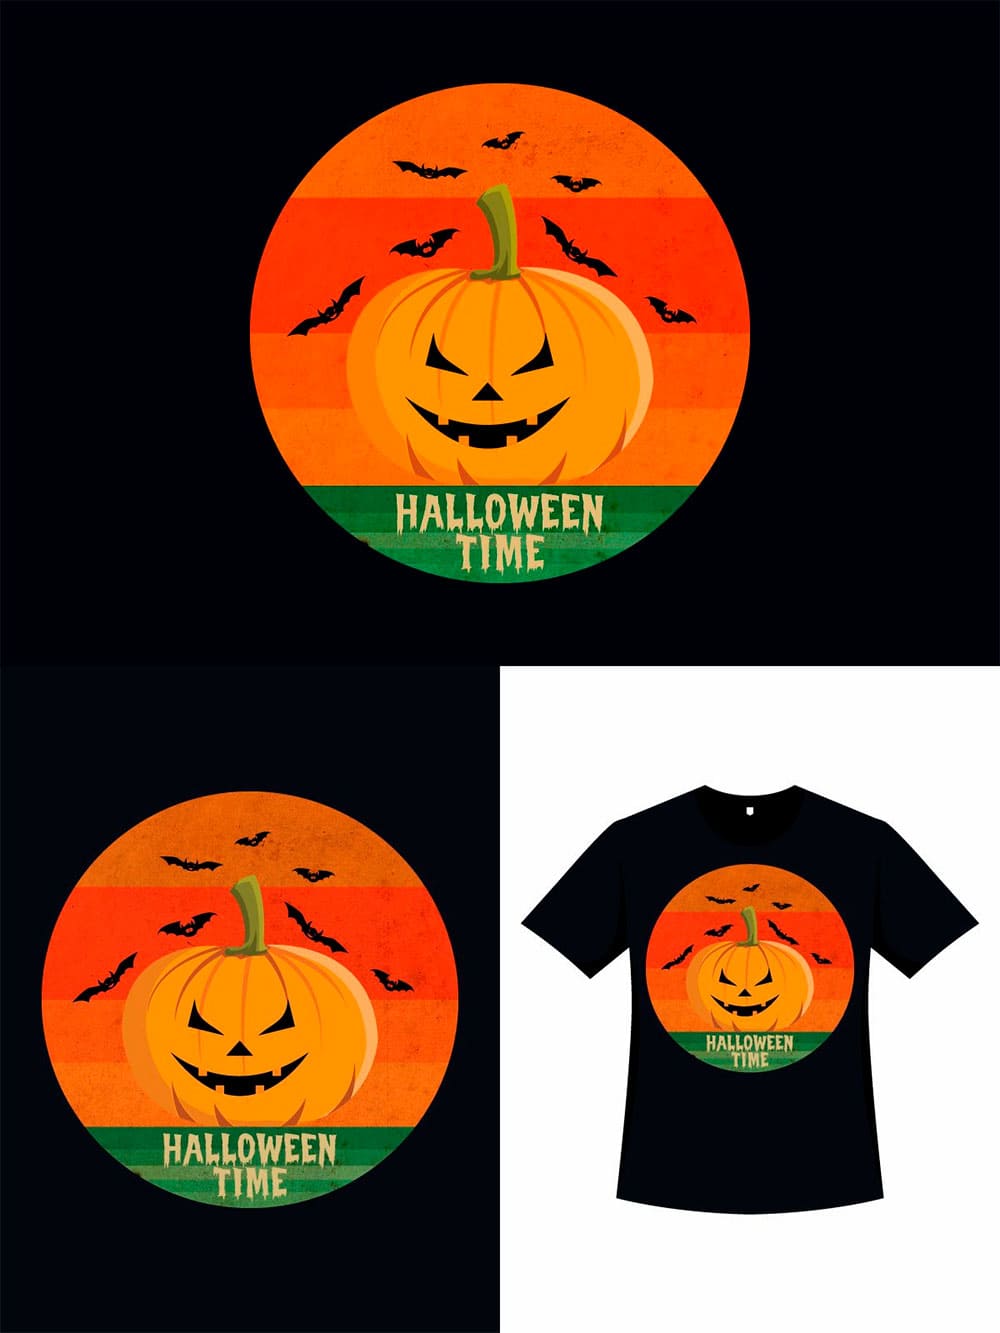 Halloween spooky retro t-shirt design, picture for pinterest.